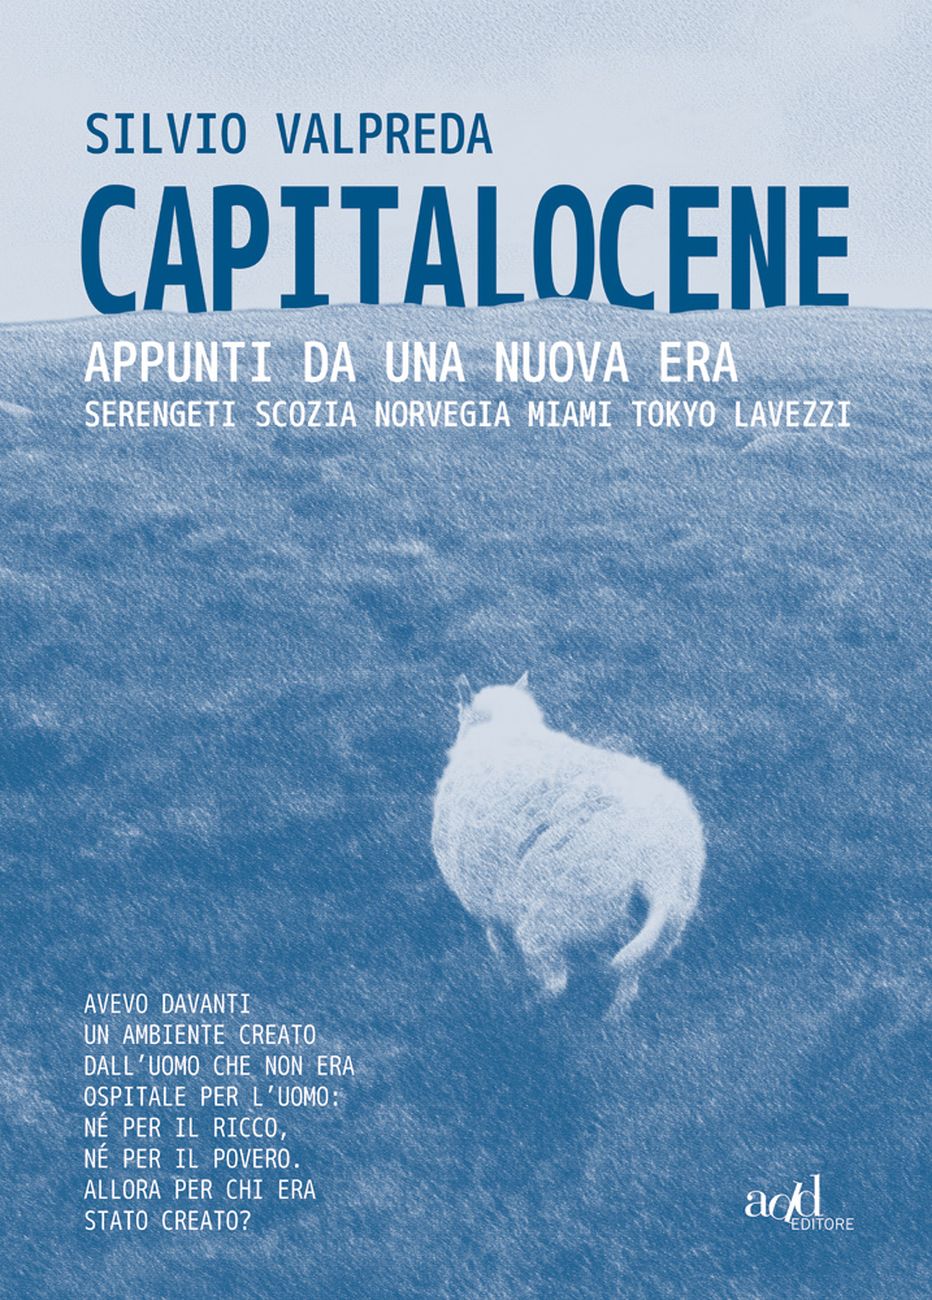 Silvio Valpreda – Capitalocene (ADD Editore, Torino 2020)